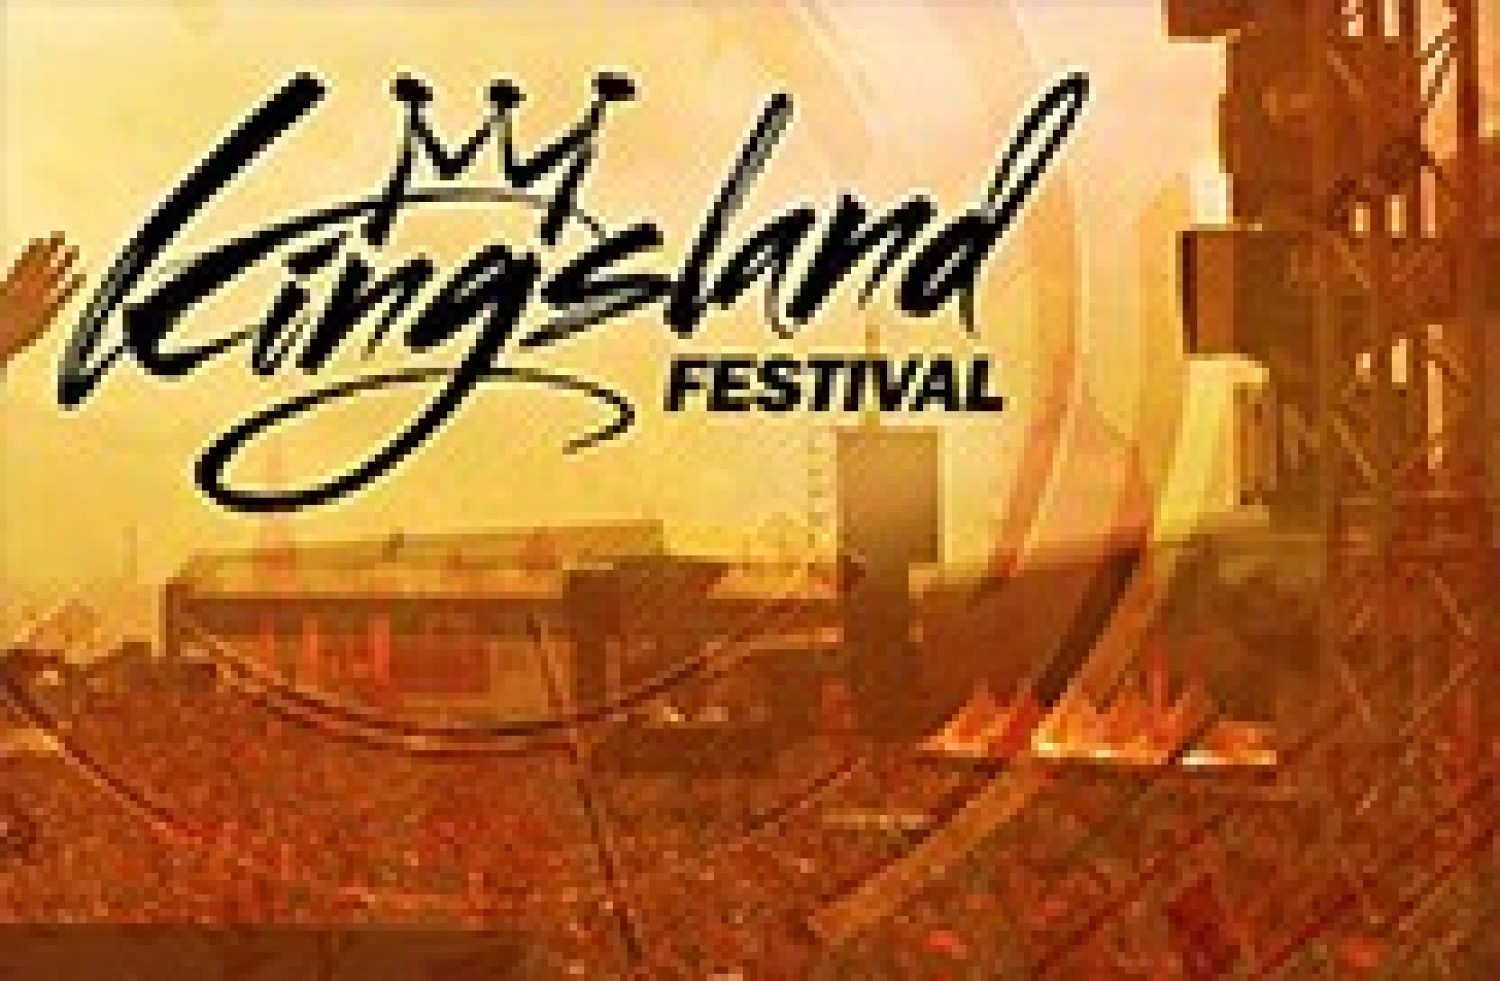 Party report: Kingsland Festival, Amsterdam (27-04-2015)